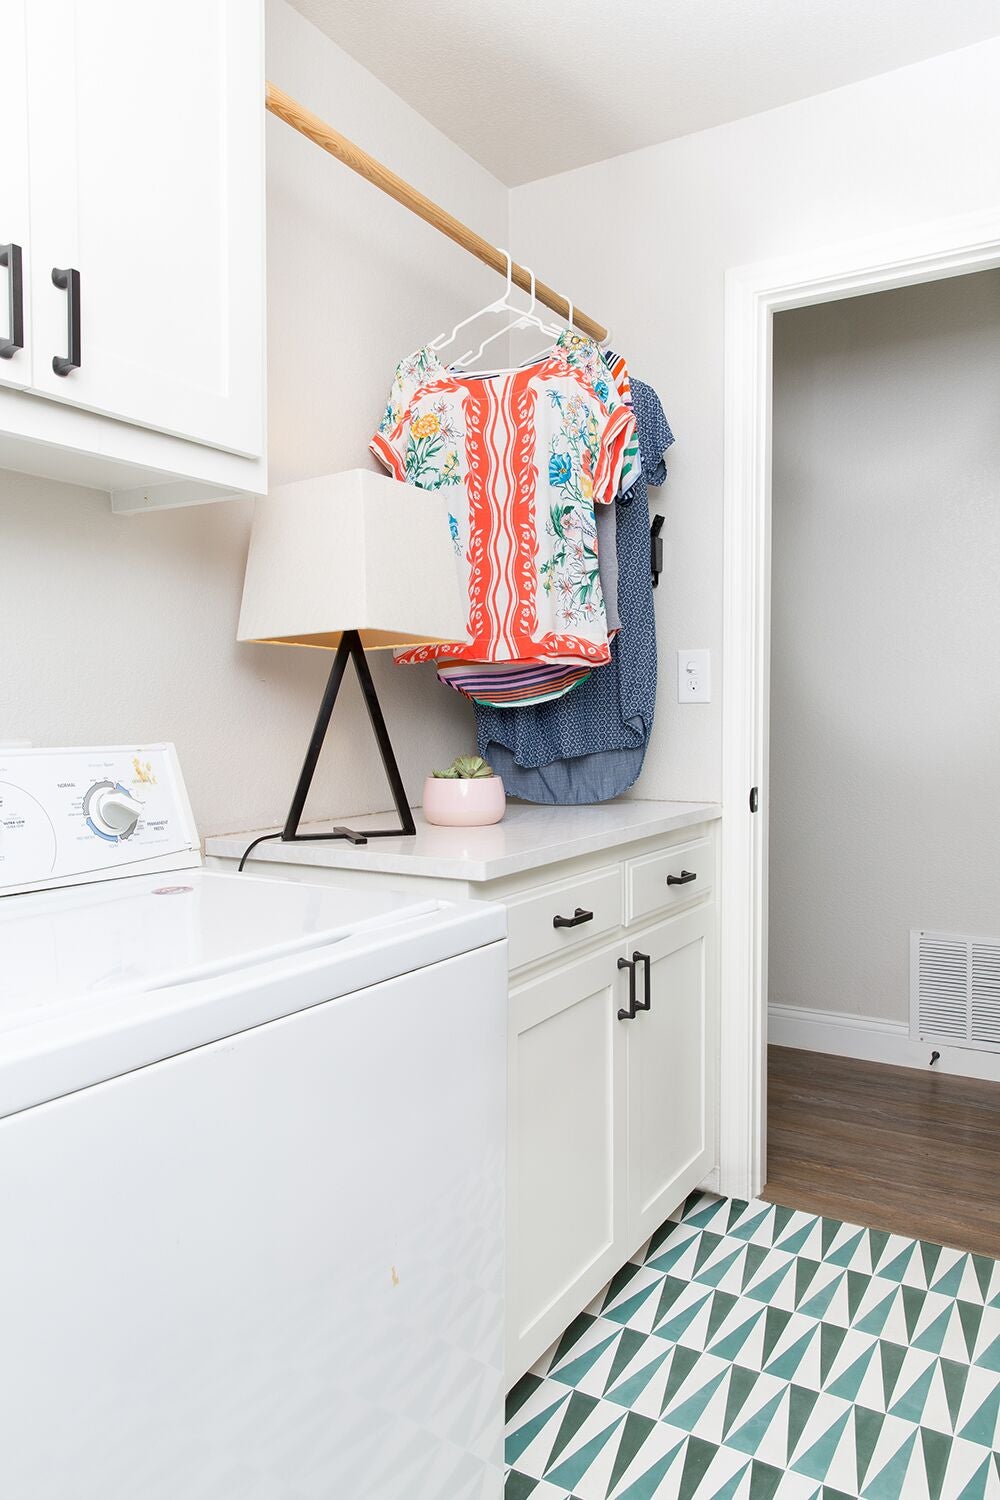 Lesley-Myrick-Laundry-Room-Design